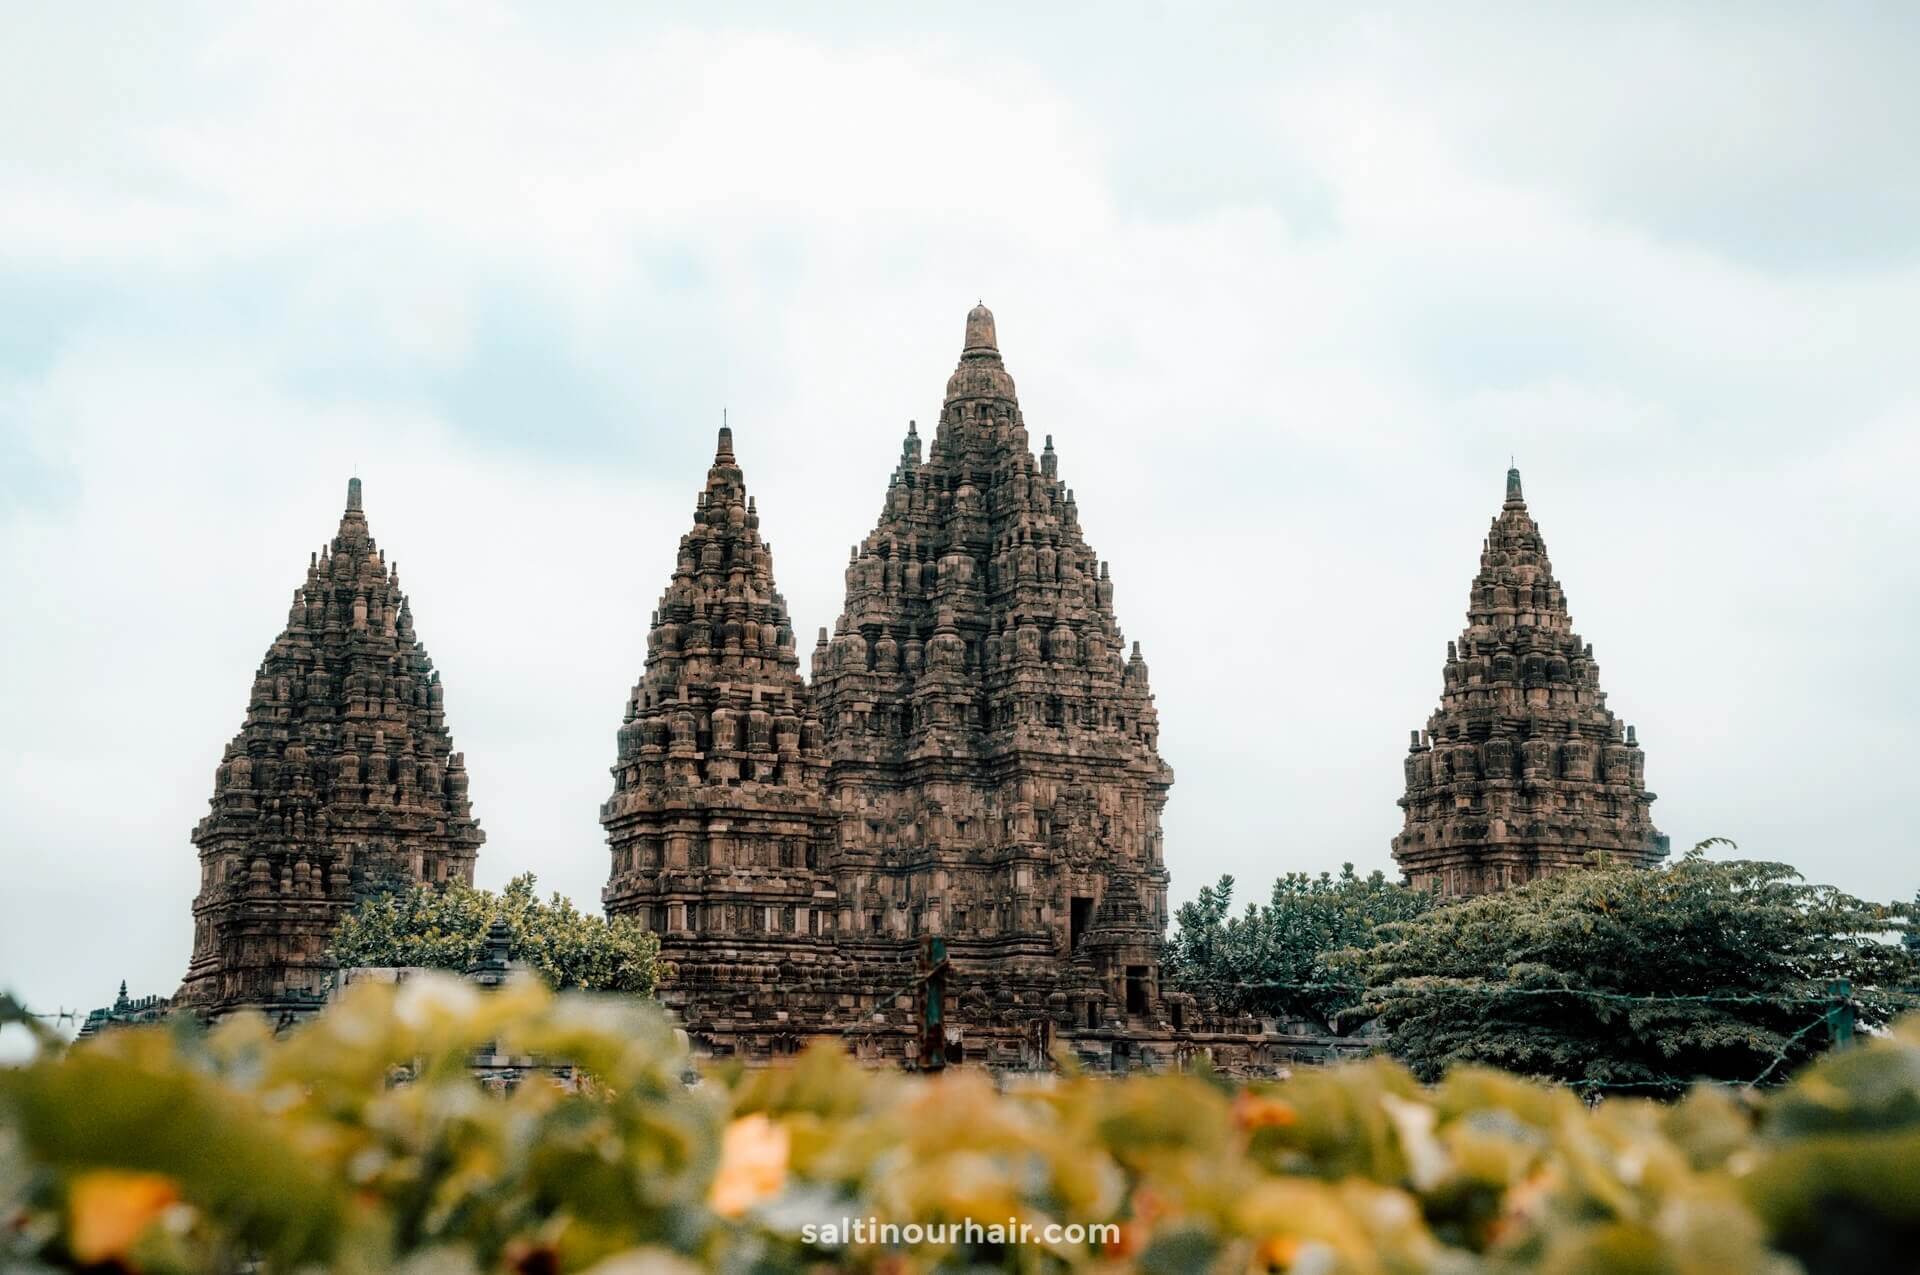 doen in IndonesiÃ« Yogyakarta Prambanan-tempel doen?